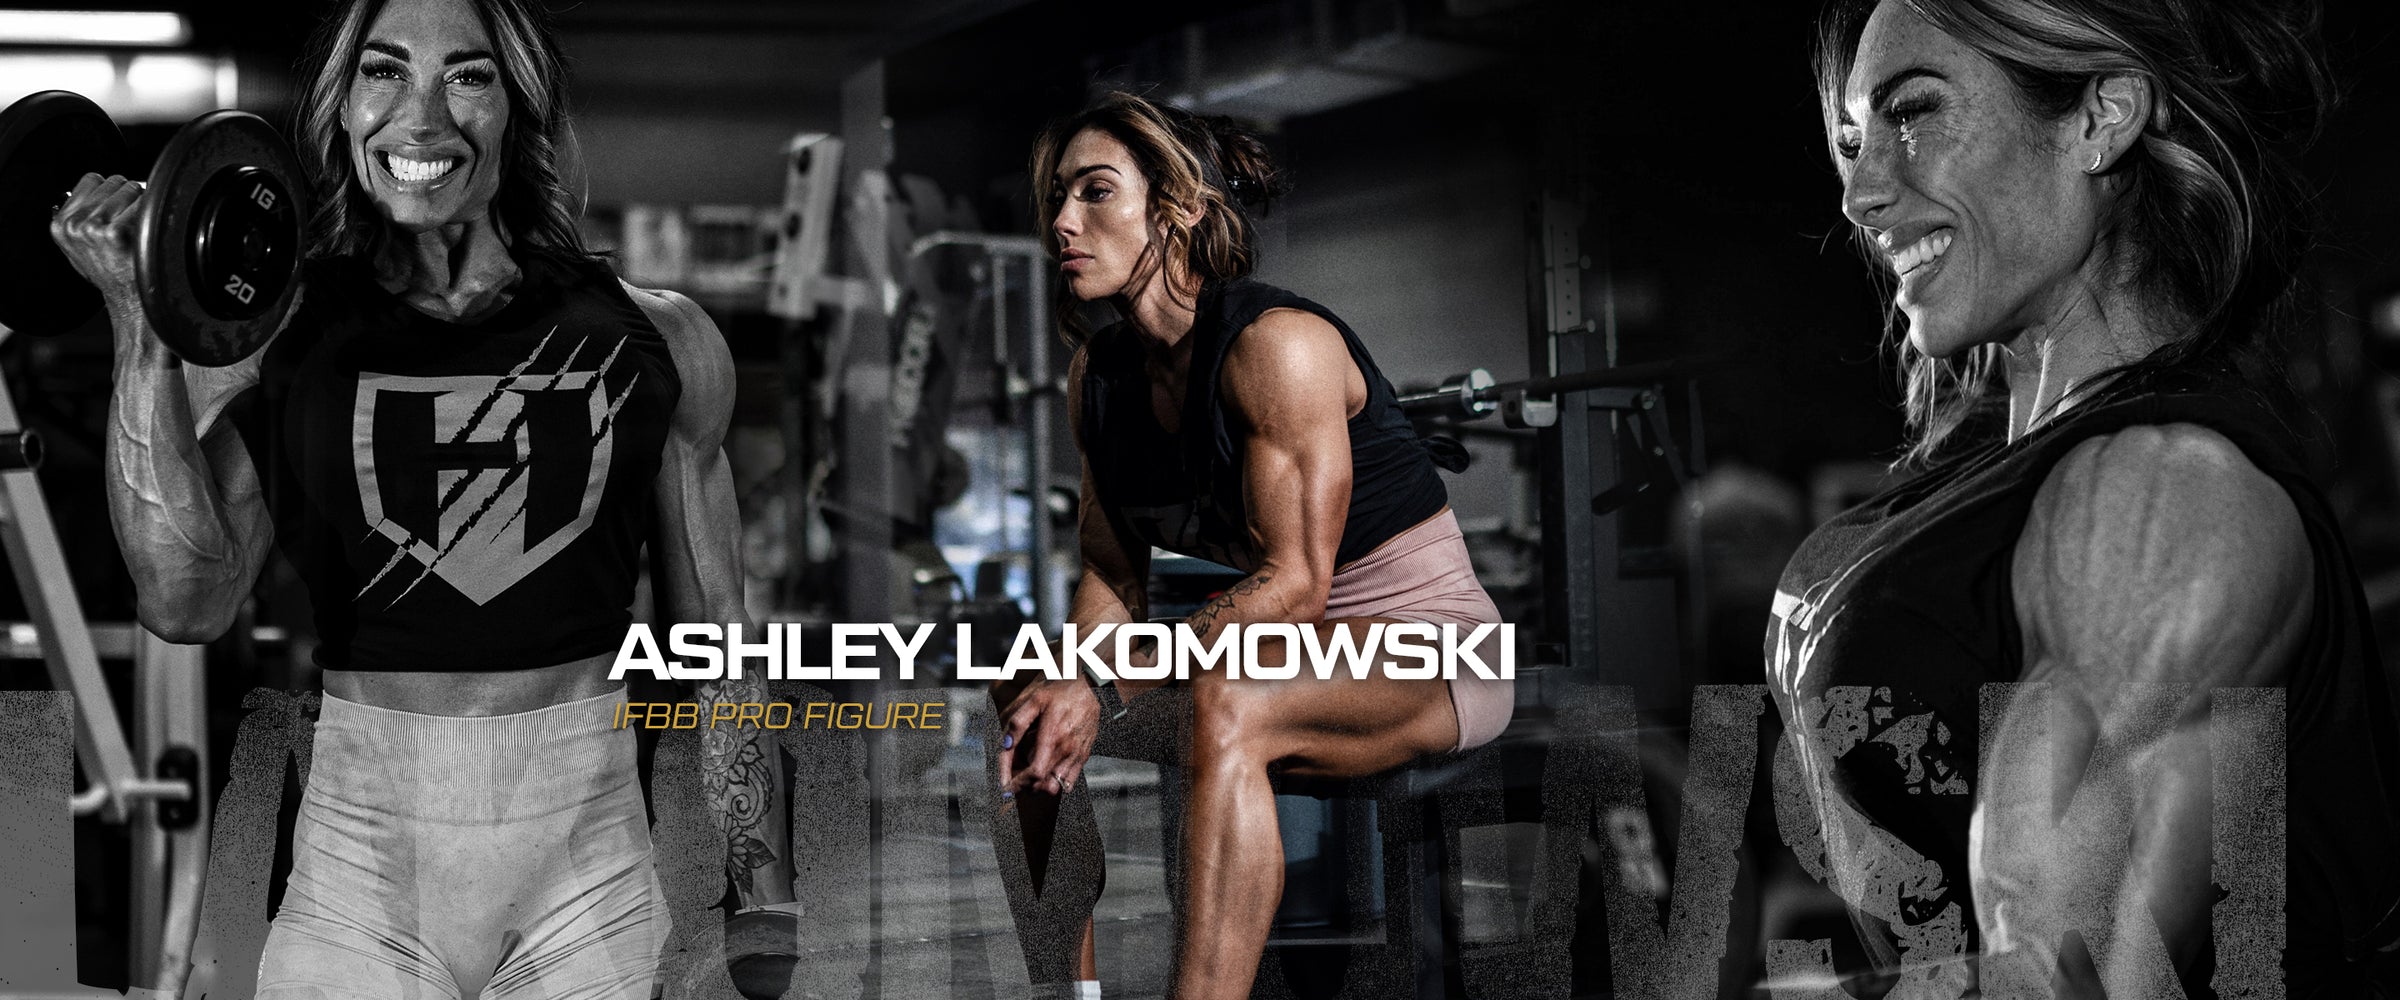 Hosstile Athlete Ashley Lakomowski IFBB Pro Figure Competitor